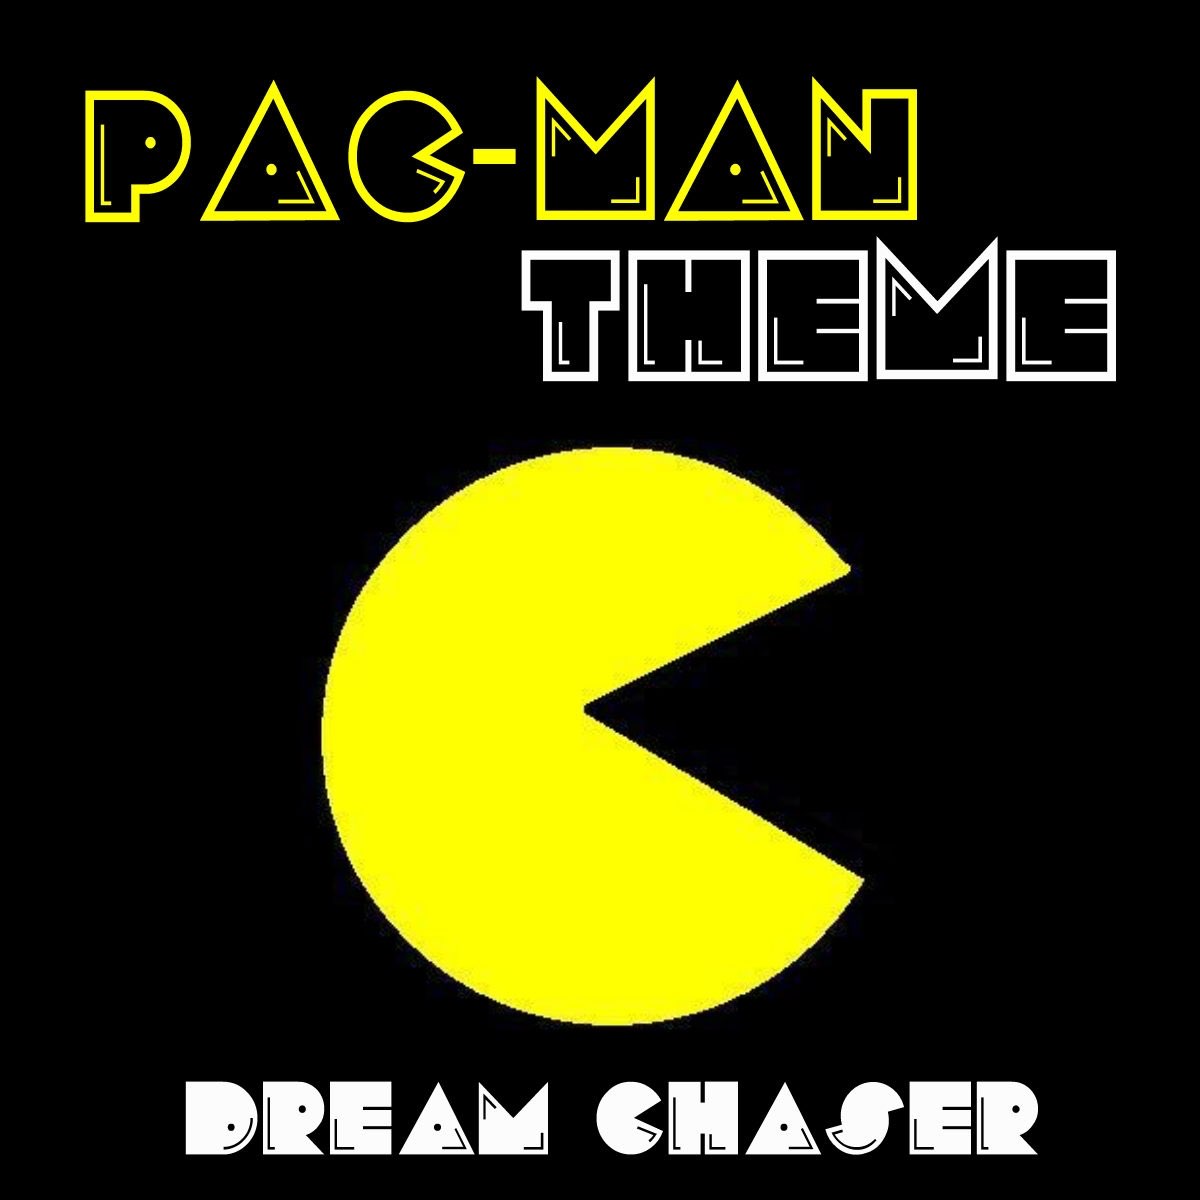 Dream soundtrack. Mr Pacman musician.